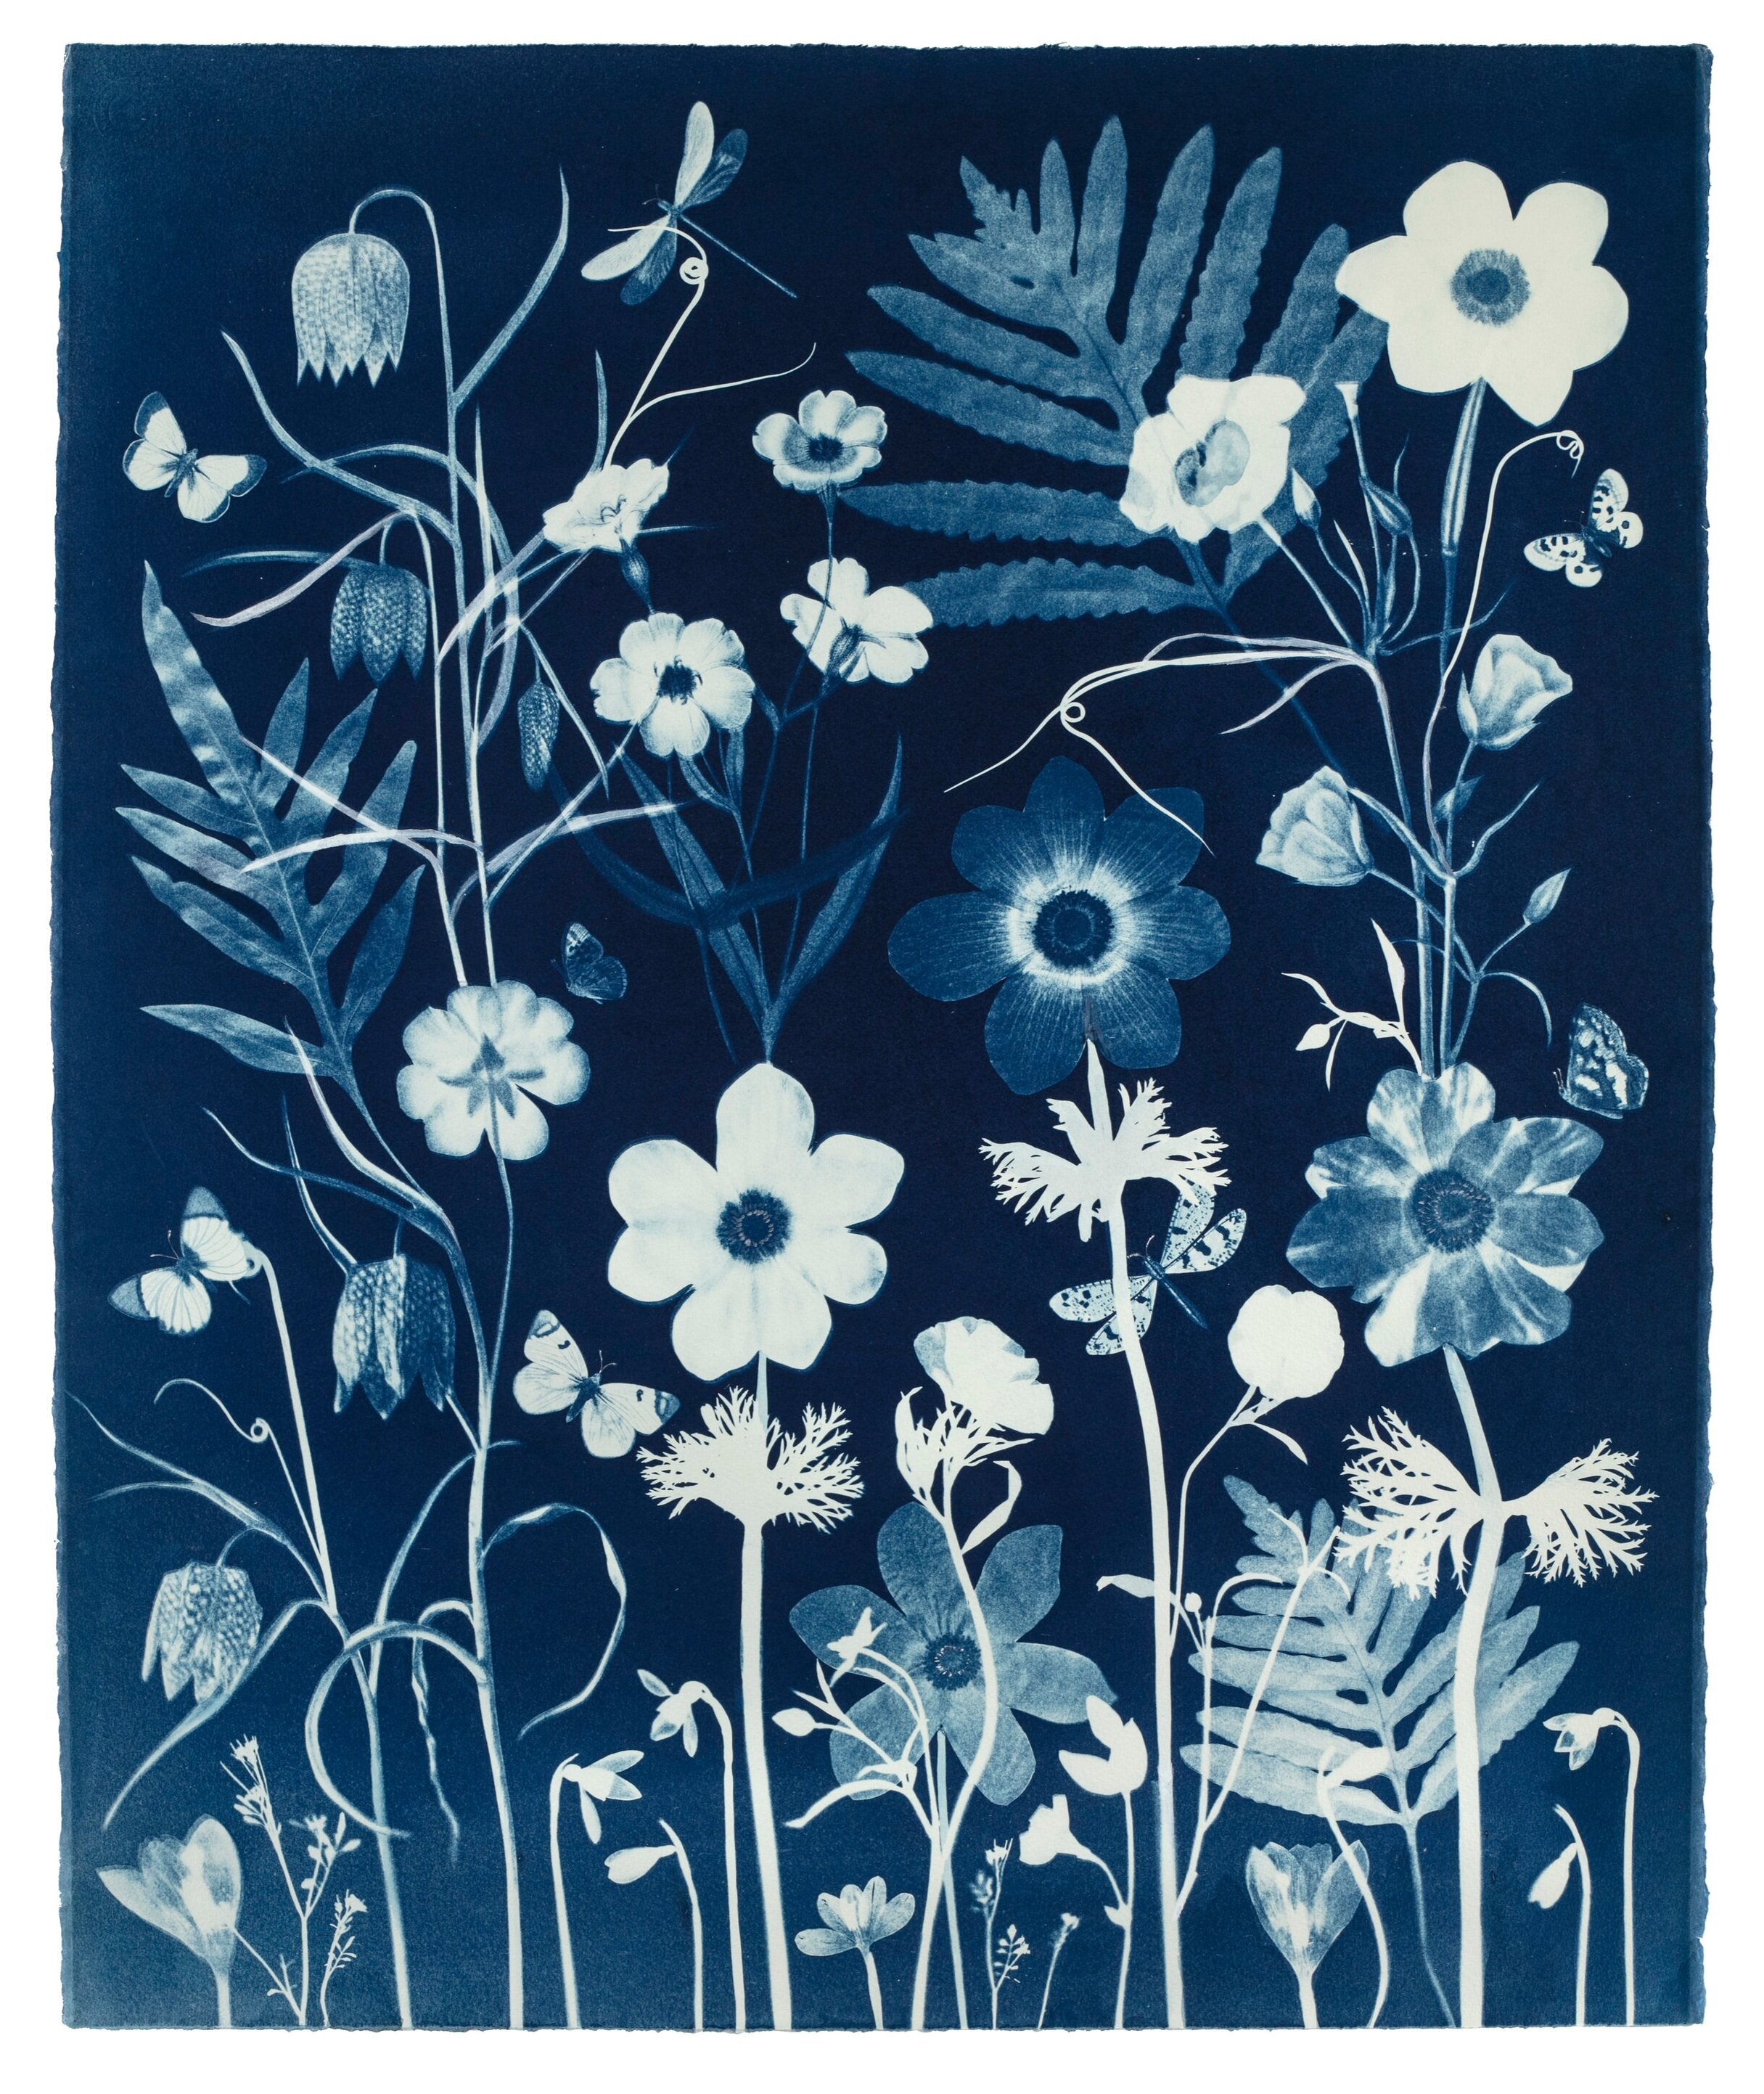 Cyanotype Painting (Anemones, Ferns, Fitillarias, Snowdrops, Pollinators, etc)